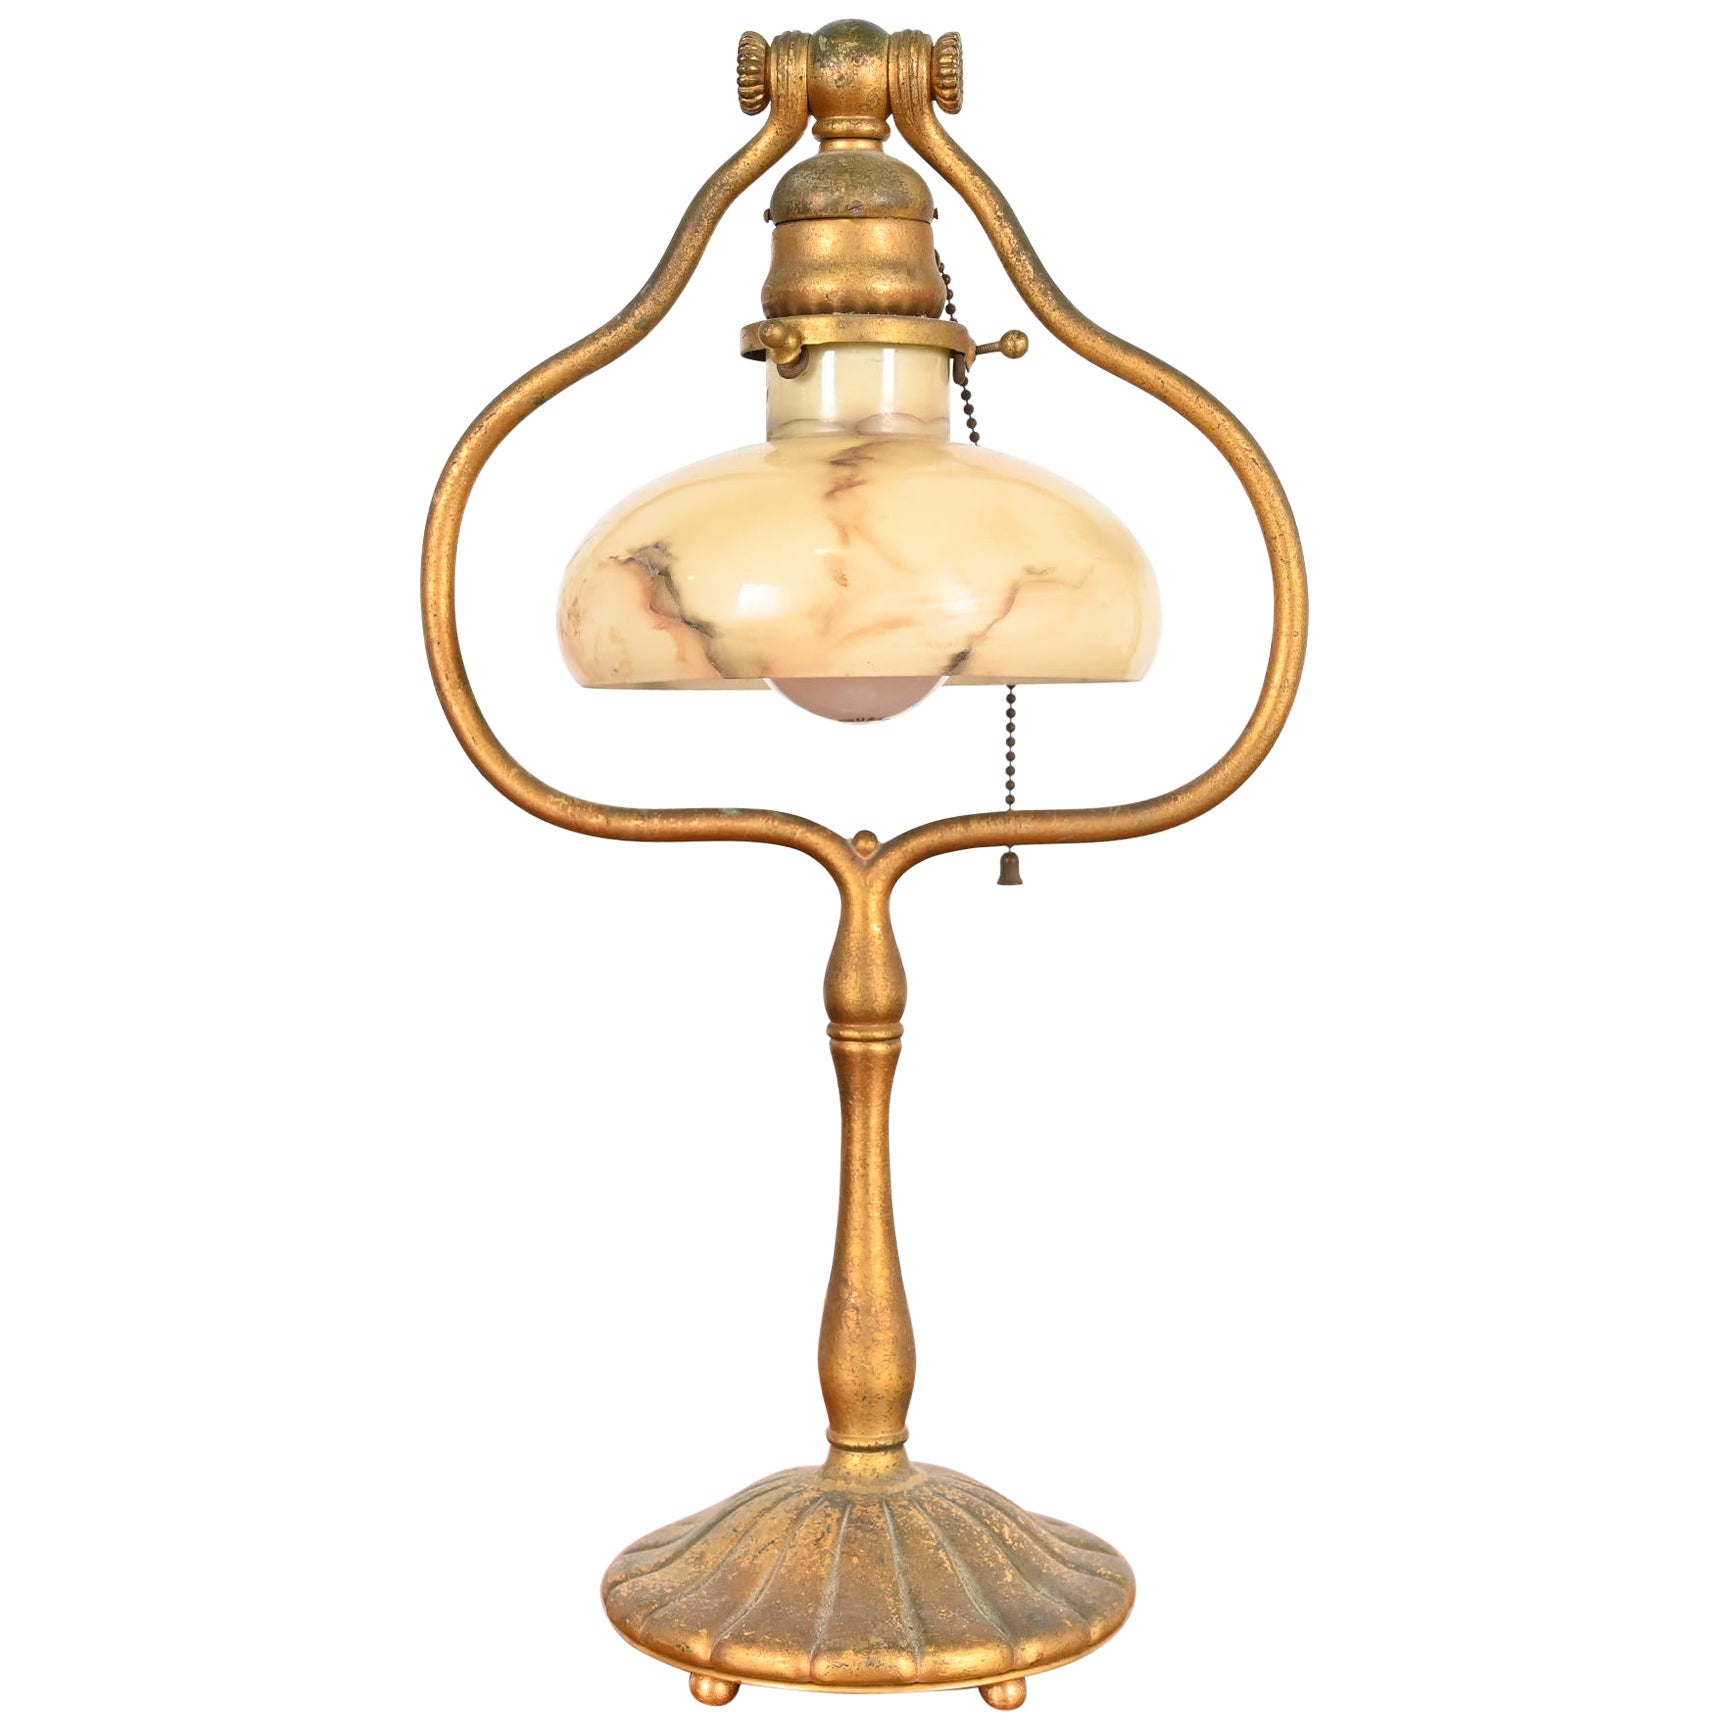 Tiffany Studios New York lampe de bureau à harpe en bronze doré, vers 1910